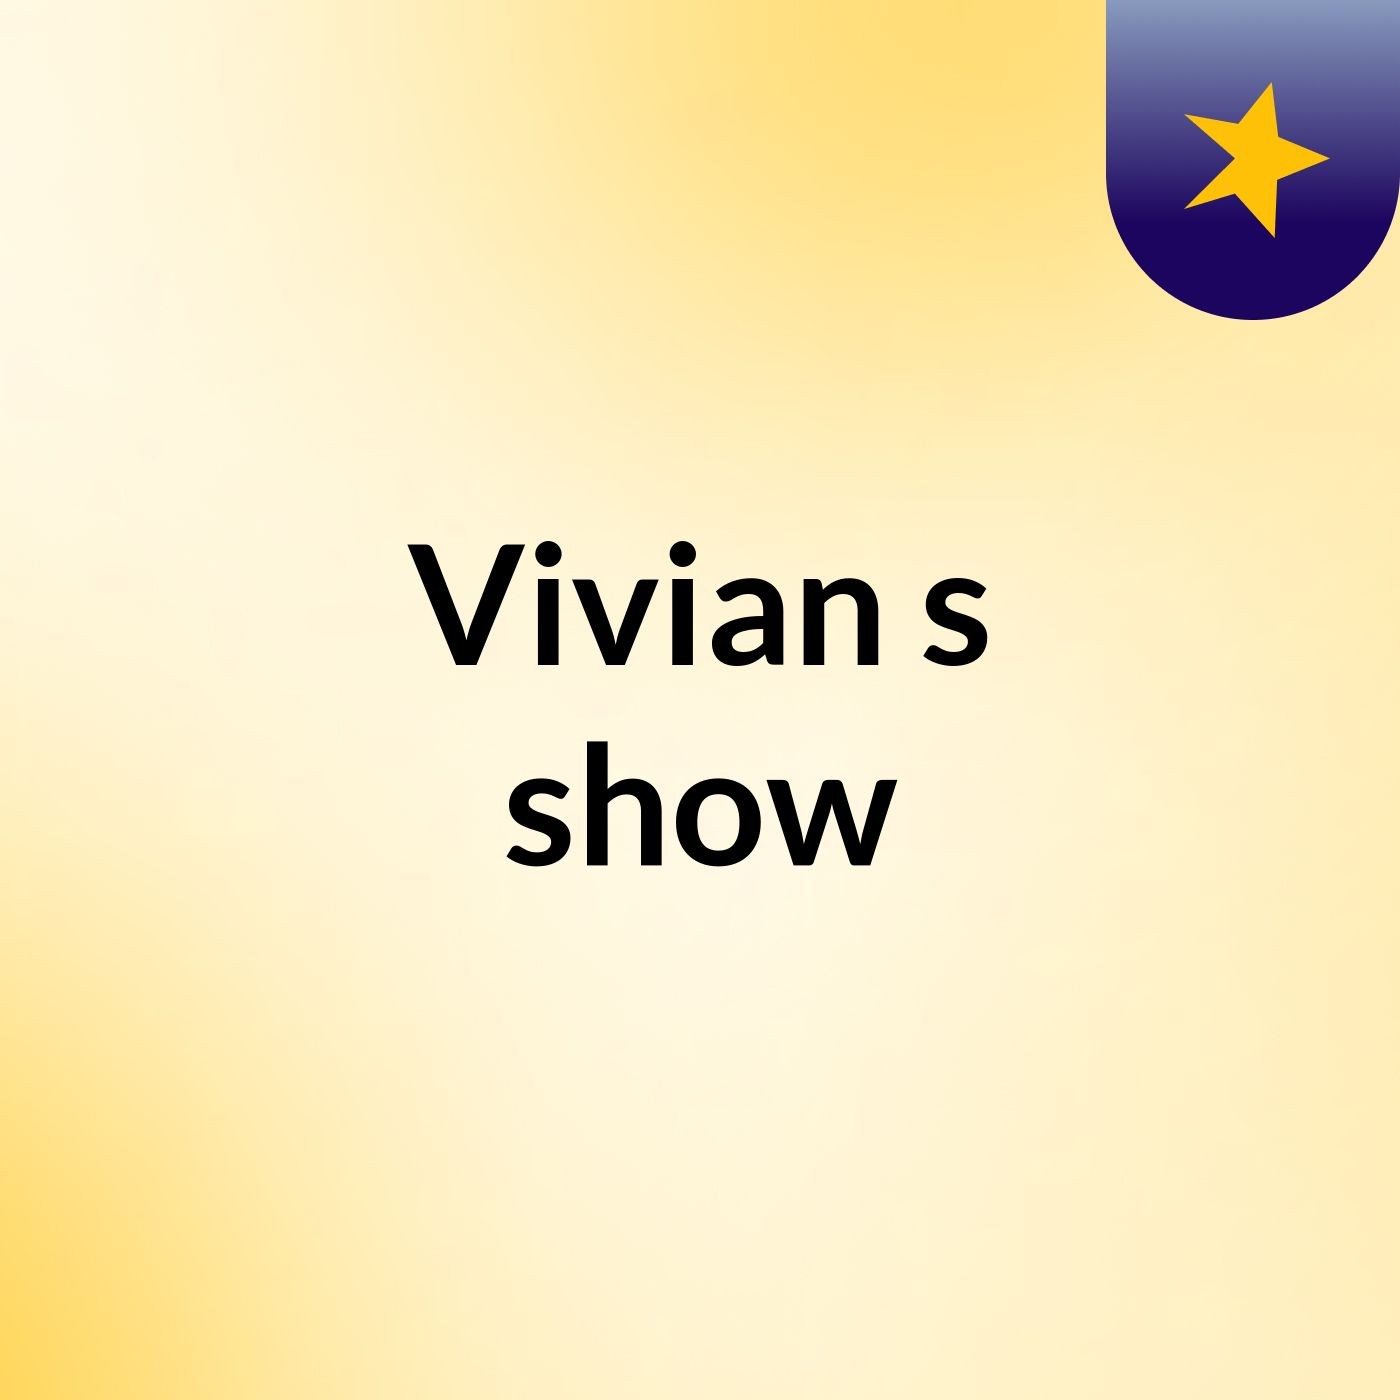 Vivian's show